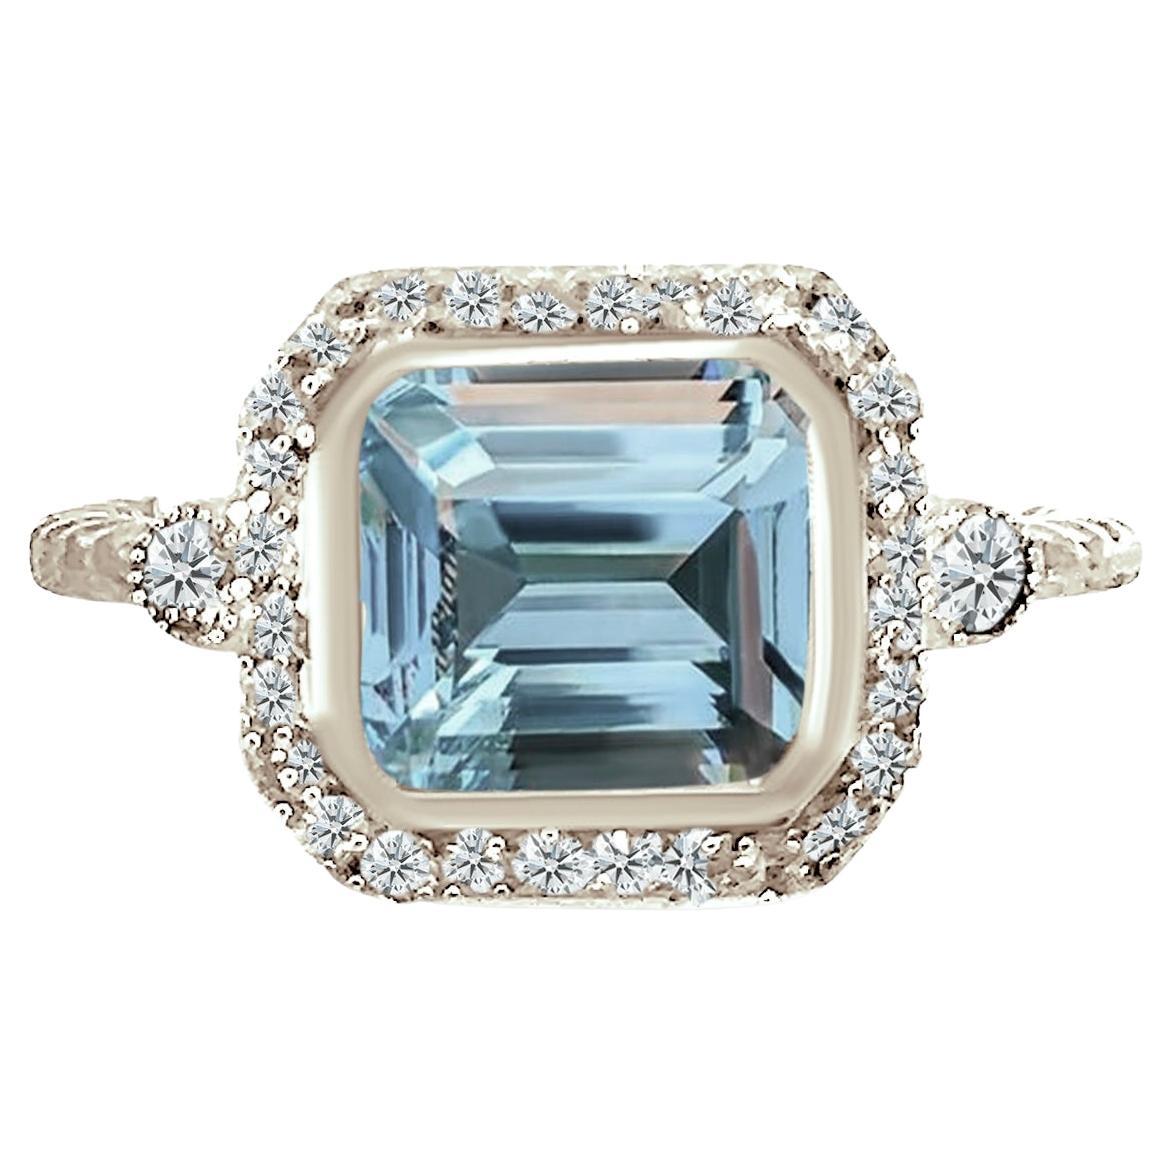 Natural Aquamarine Diamond Ring 6.5 14k White Gold 3.05 TCW Certified